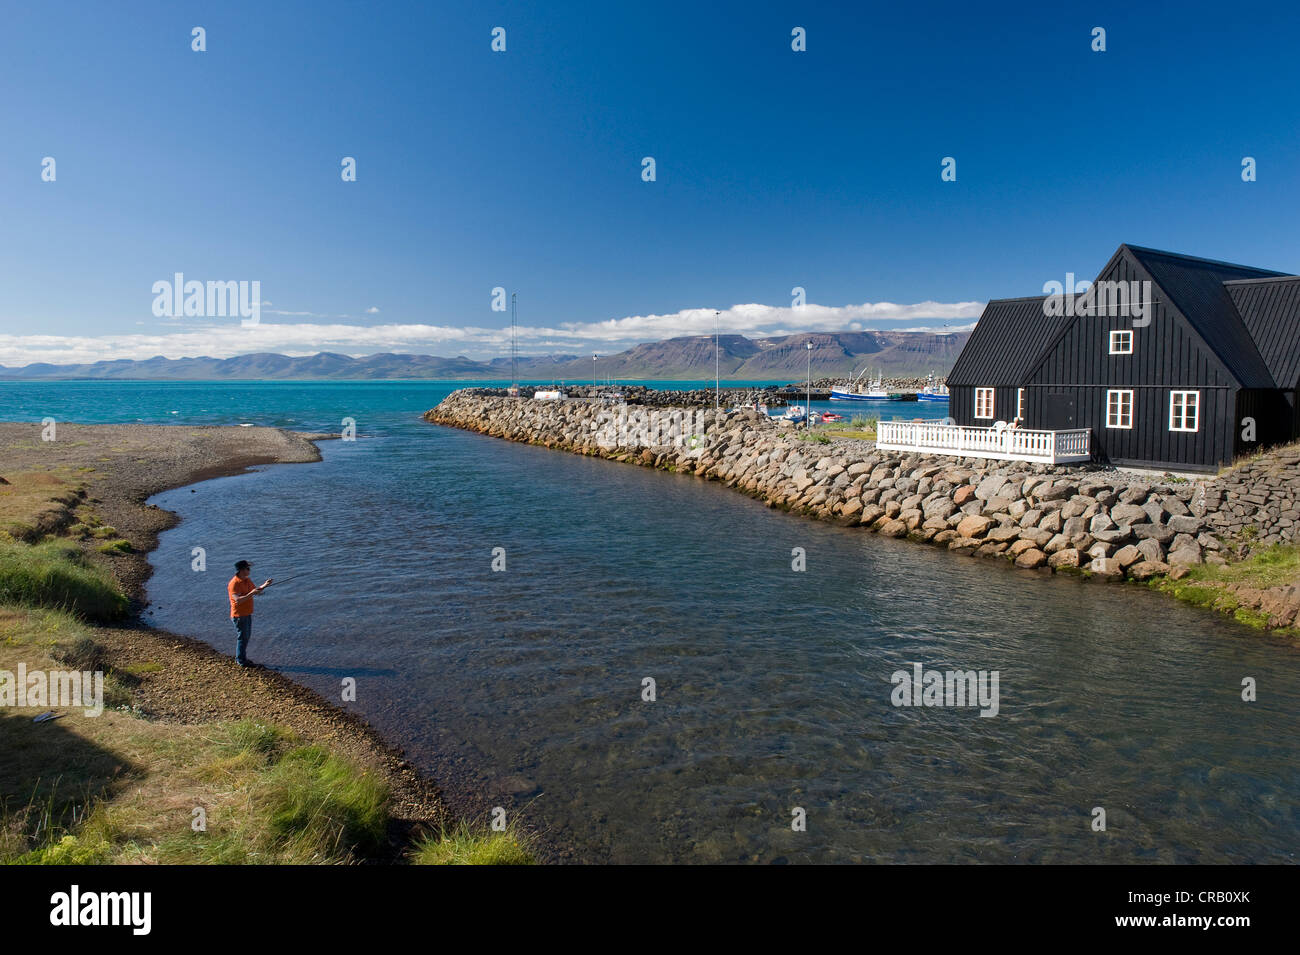 Casas de islandia fotografías e imágenes de alta resolución - Alamy